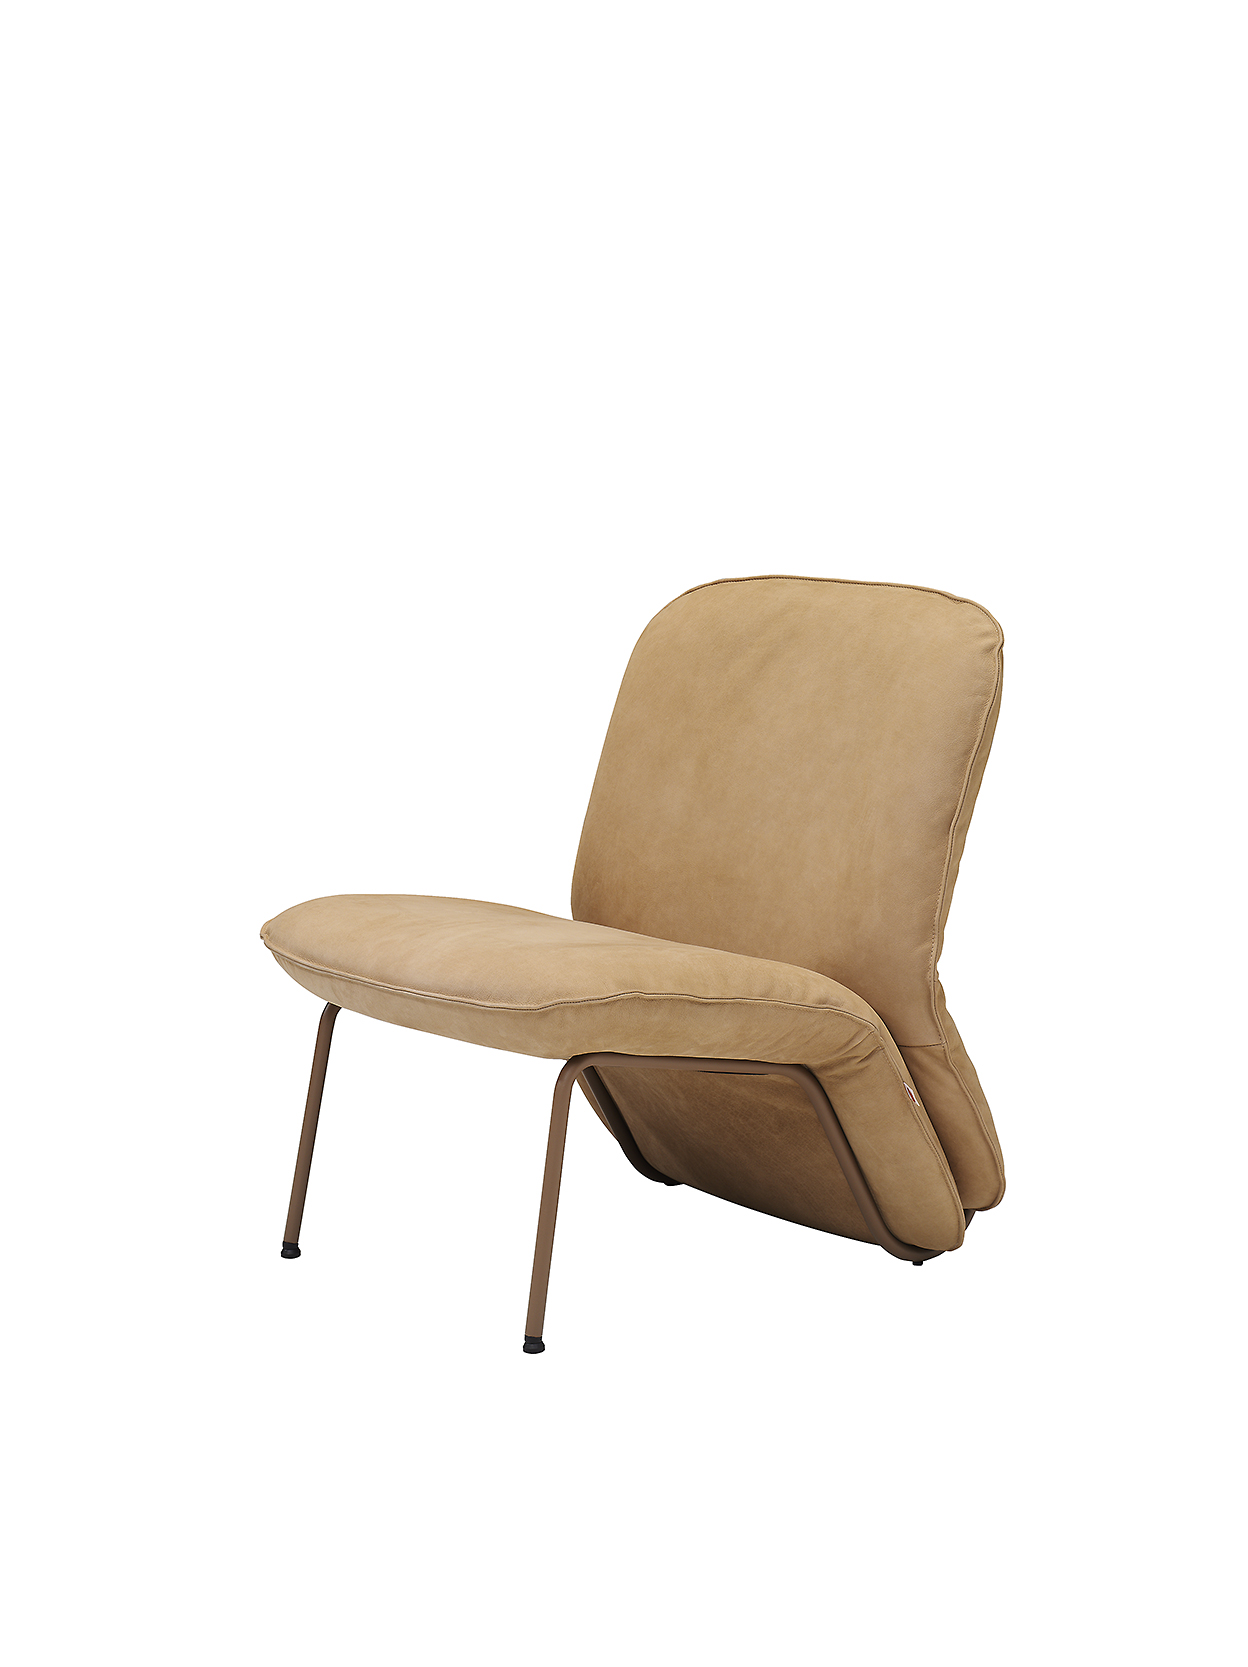 Productafbeelding van Jess Design fauteuil Clip